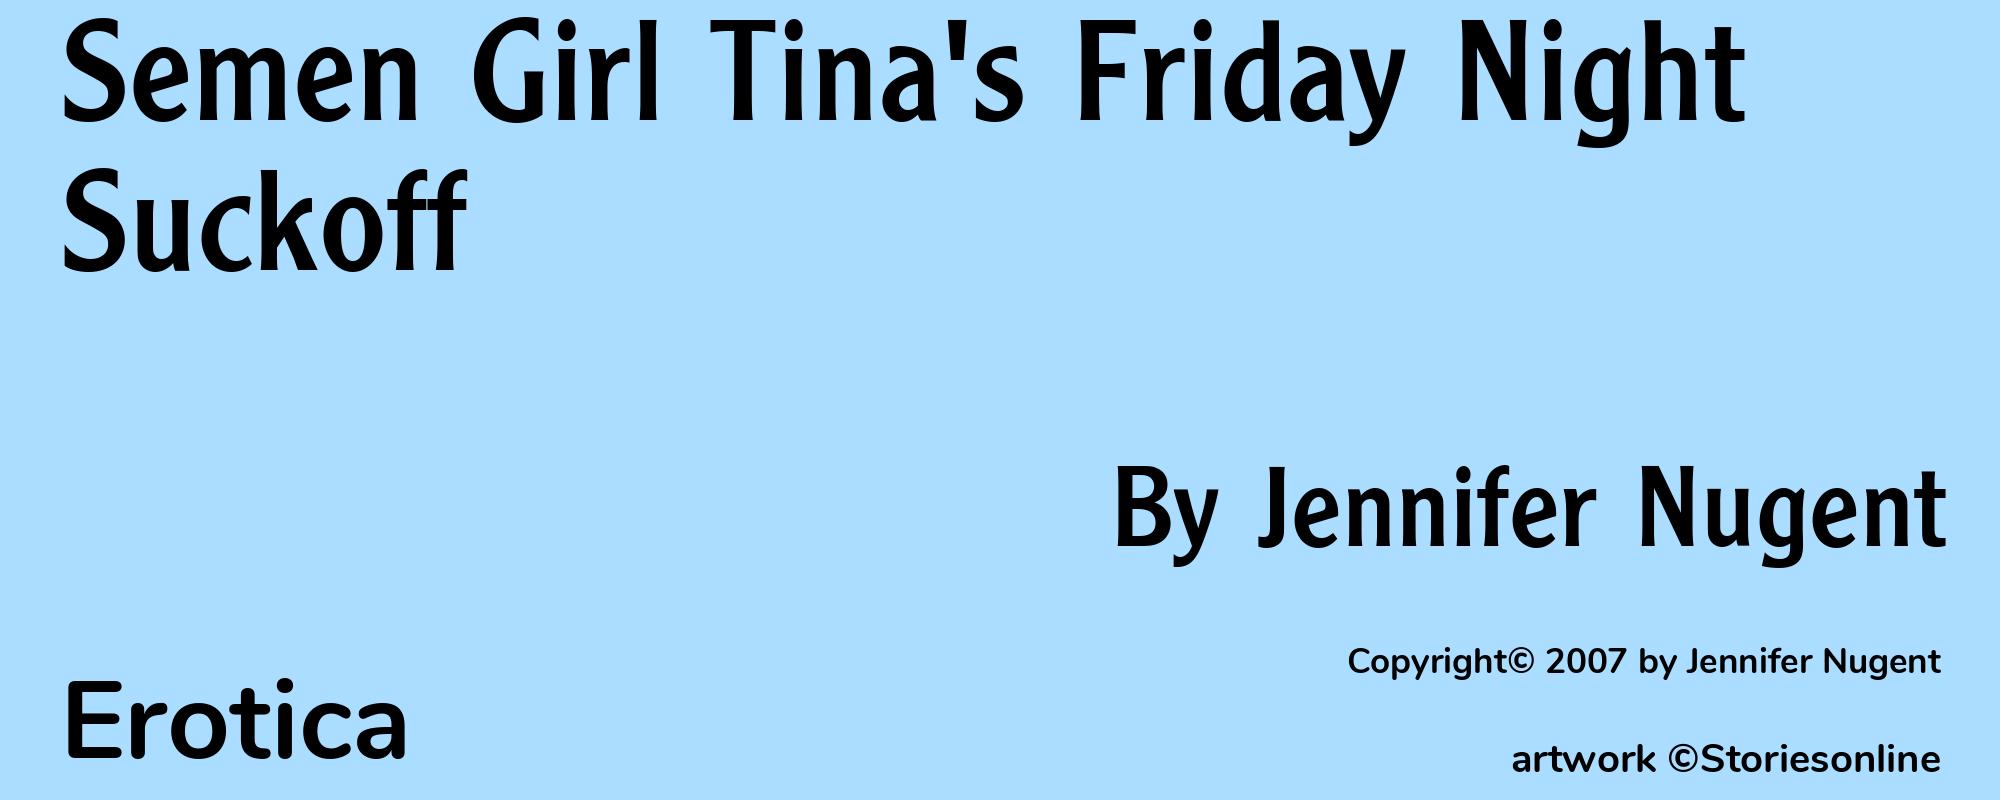 Semen Girl Tina's Friday Night Suckoff - Cover